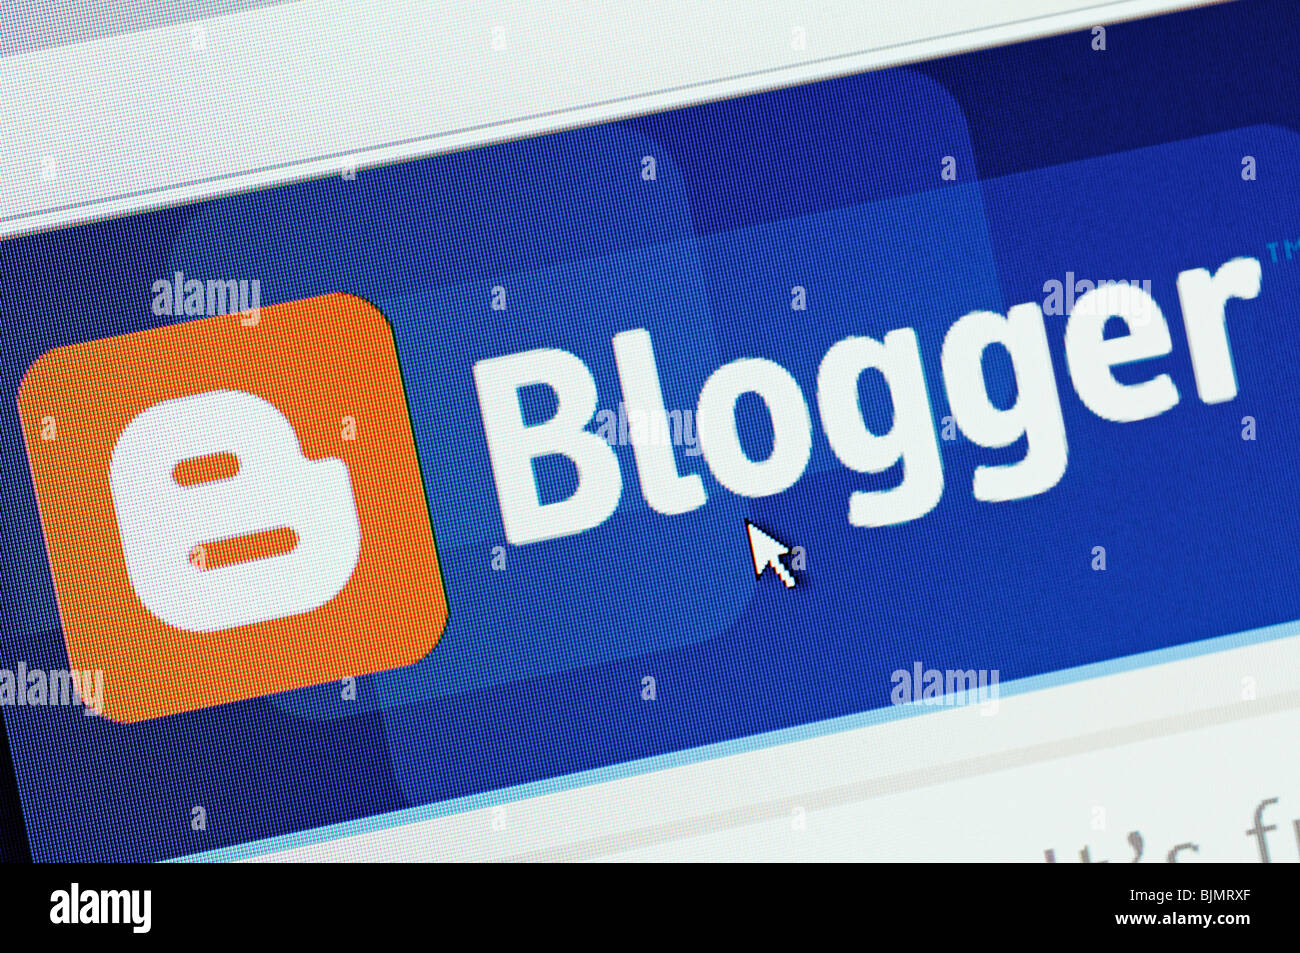 Blogger Blogging Website Stock Photo